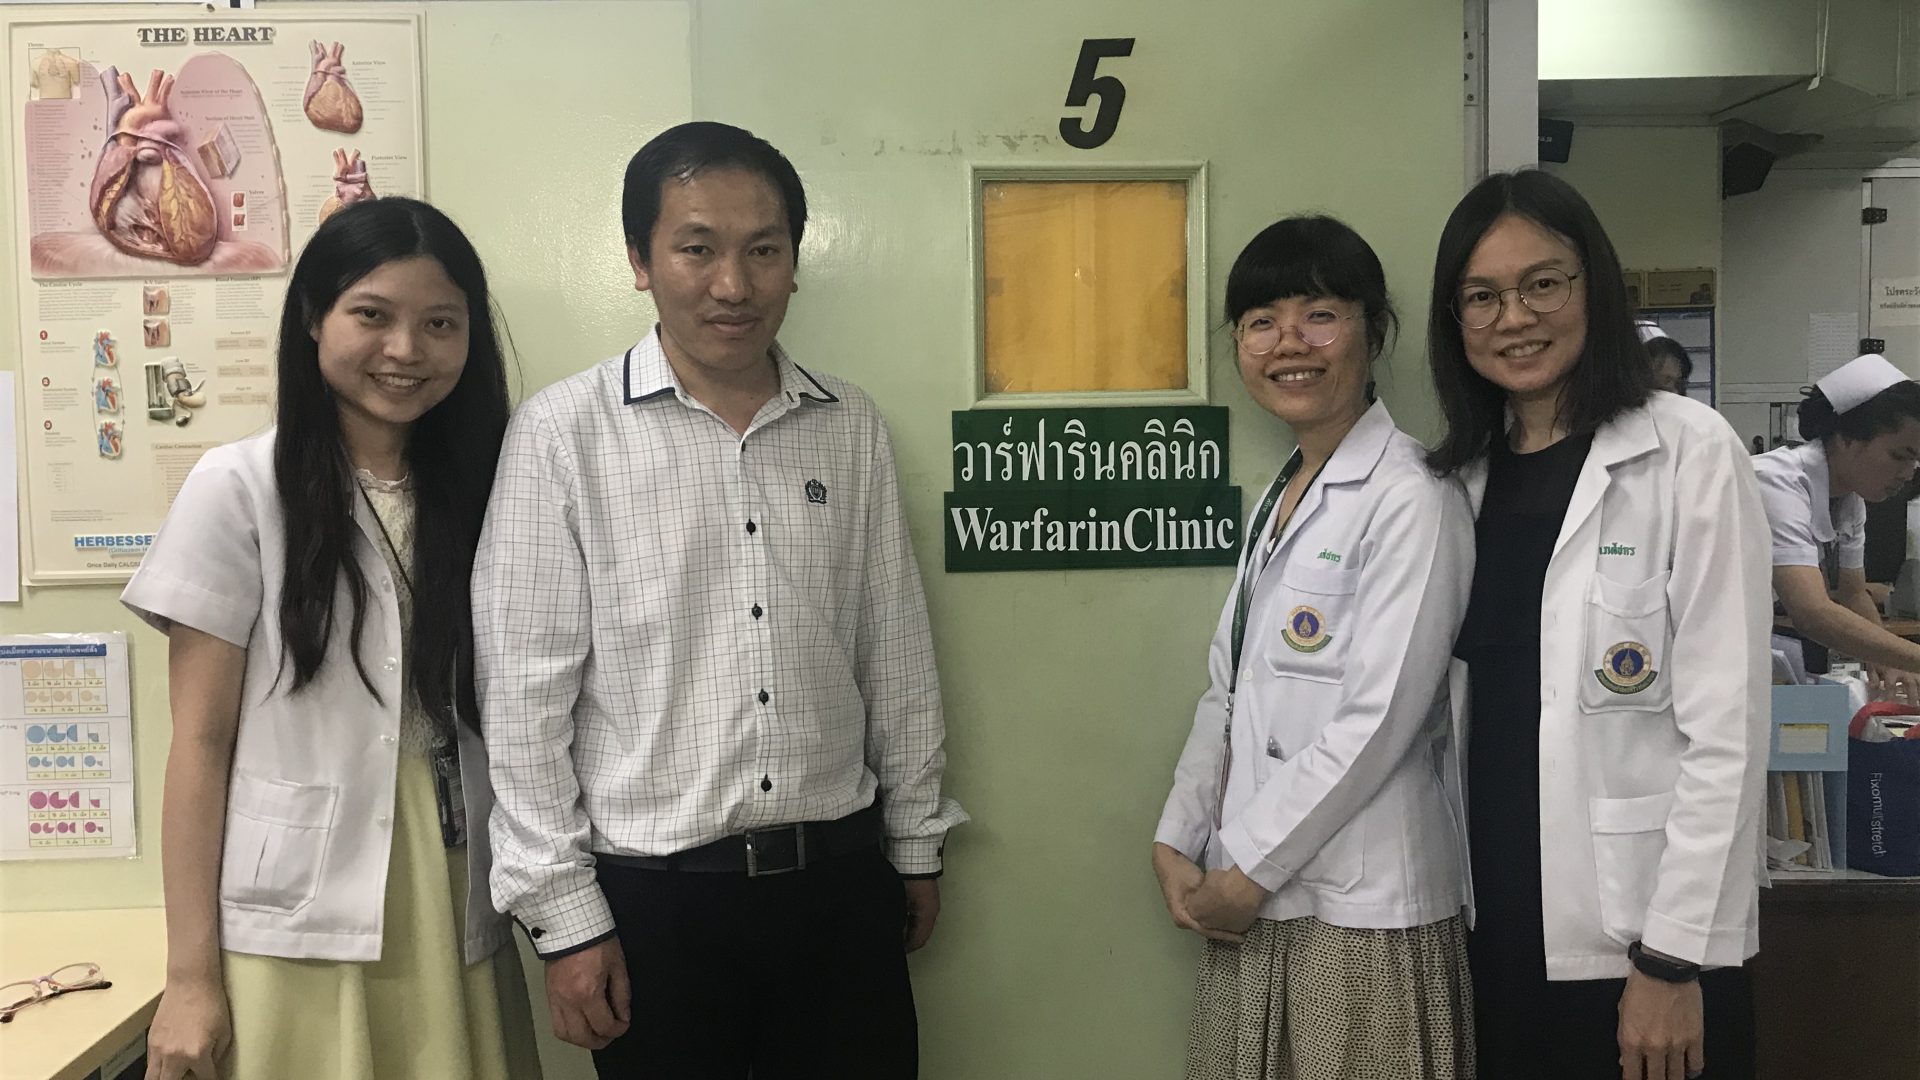 Bhutan Pharmacist Attended the “Anticoagulant Training Program” at Siriraj